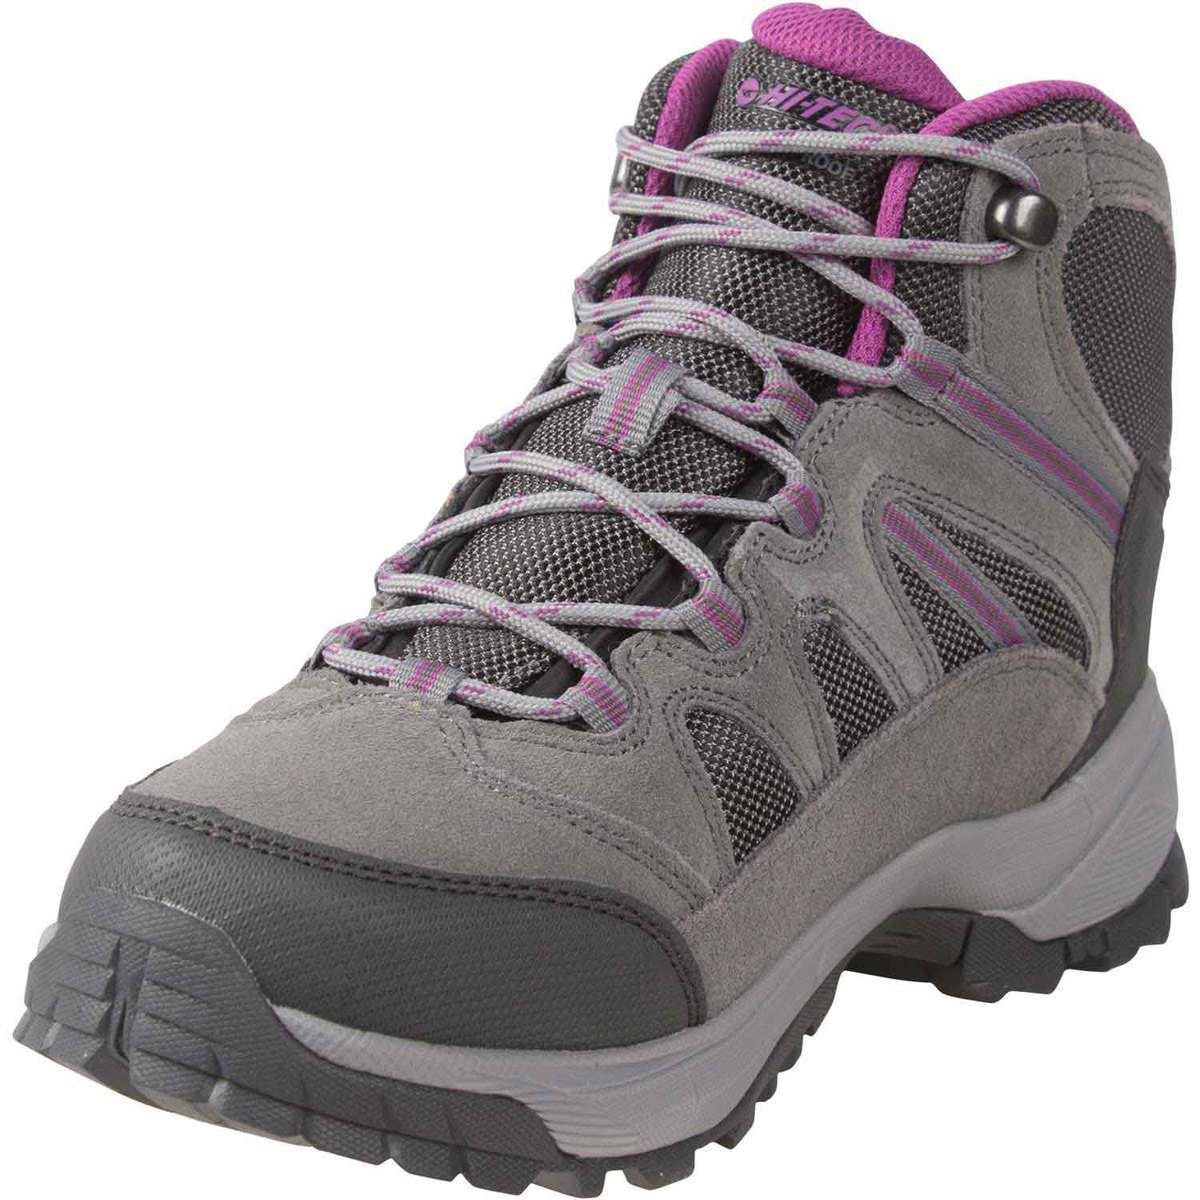 Hi-Tec Women's Wasatch Waterproof Mid Hiking Boots - Charcoal - Size 7 ...